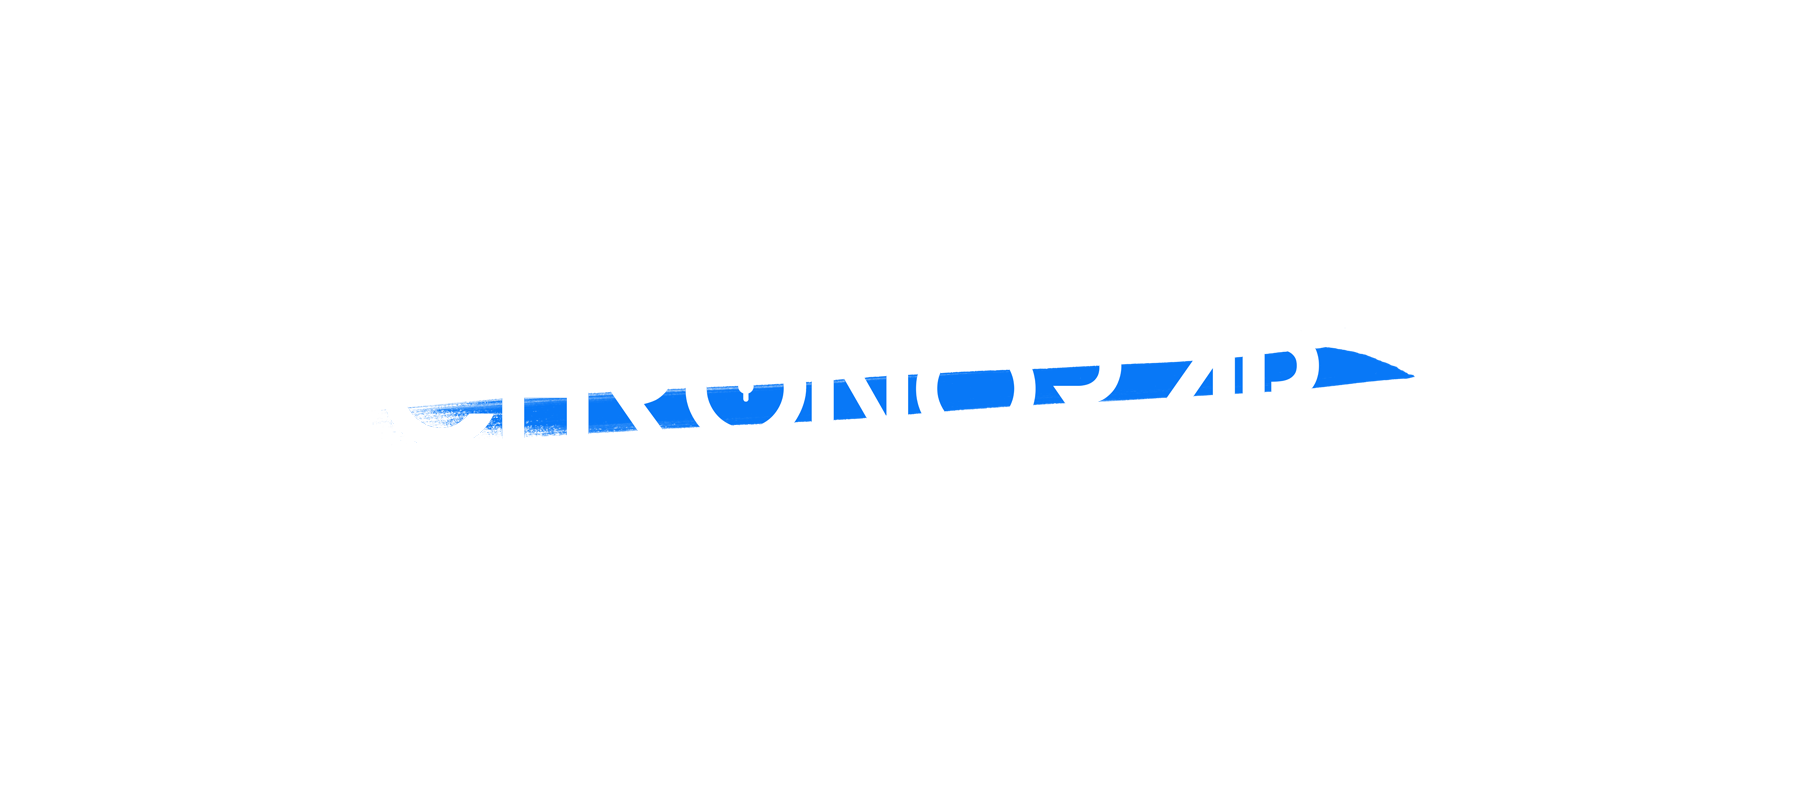 chronorap site rap francais page des artistes marseillais